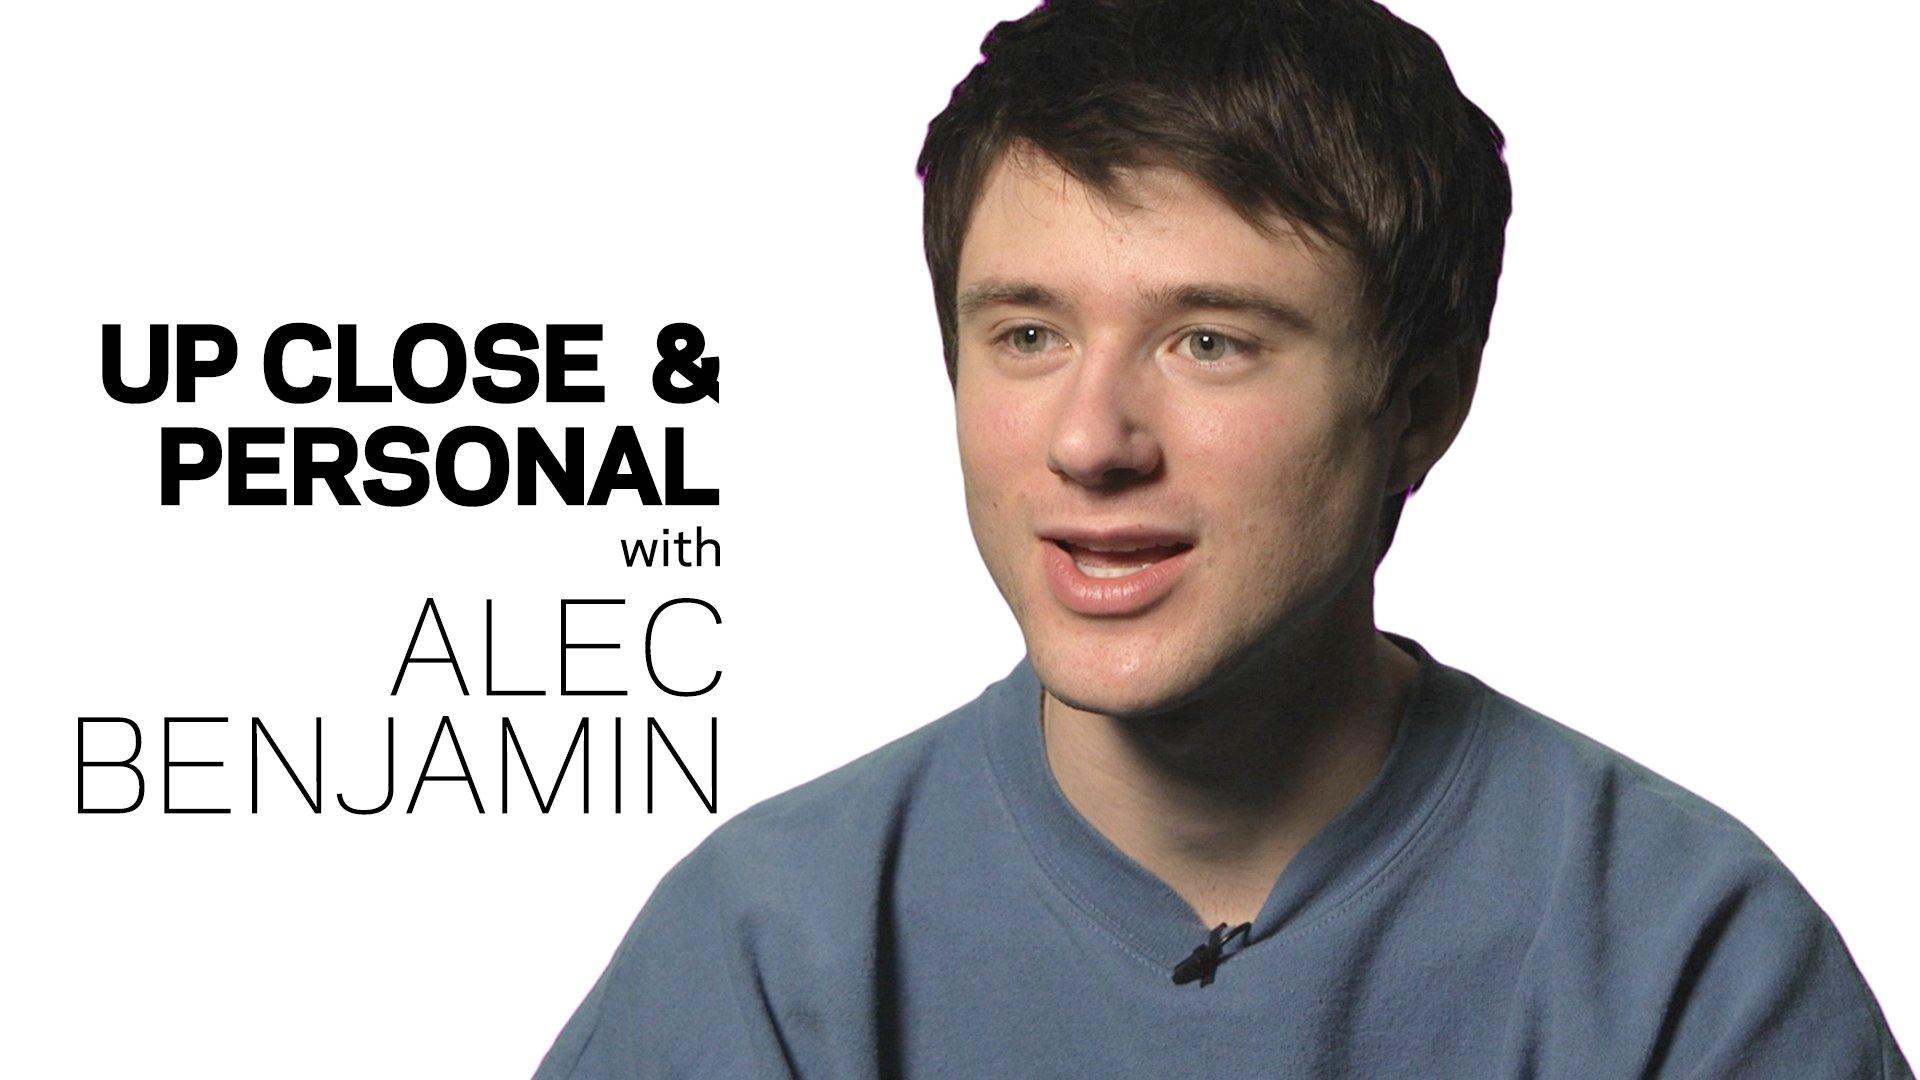 Alec Benjamin Talks Pursuing Music Dreams